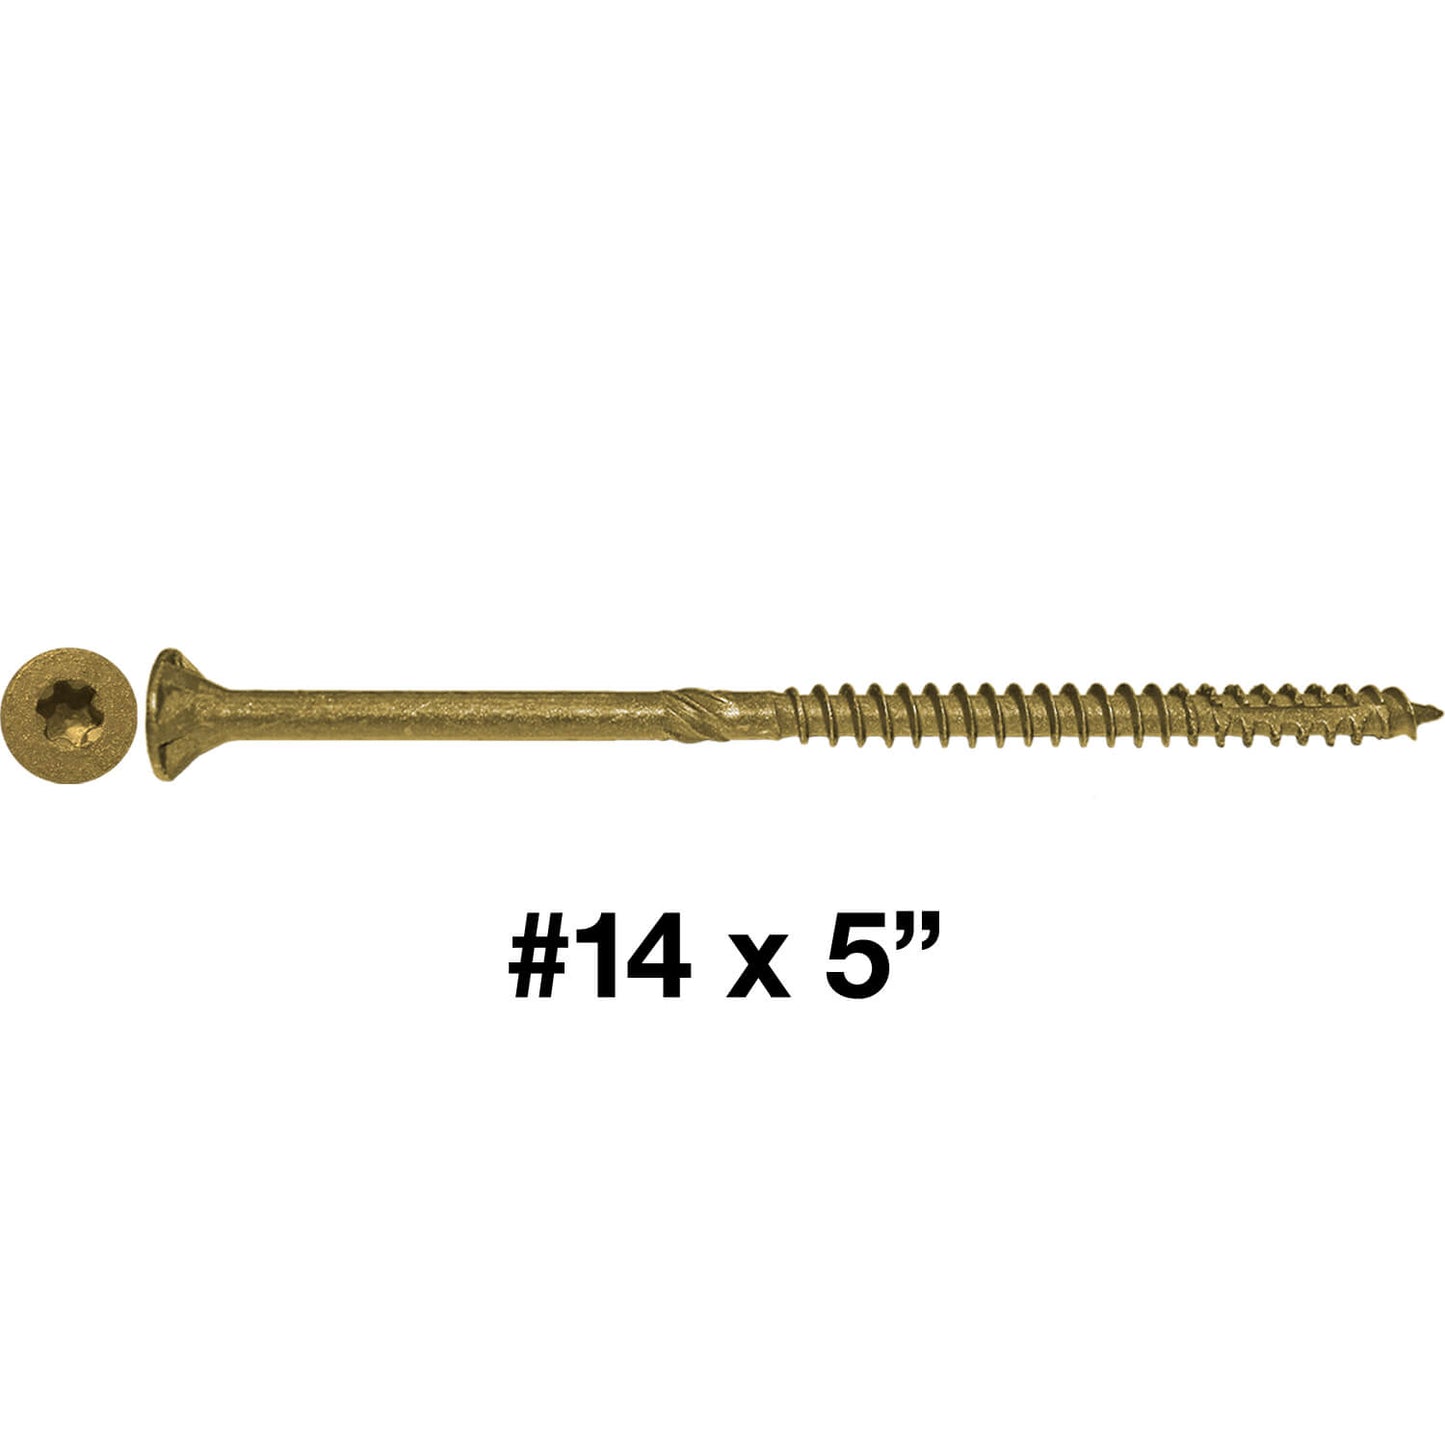 #14 x 6 Extra Long Bronze Star Wood Screw Torx/Star Drive Head (1 Pound - 25 Approx. Screw Count) - Multipurpose Torx/Star Drive Wood Screws